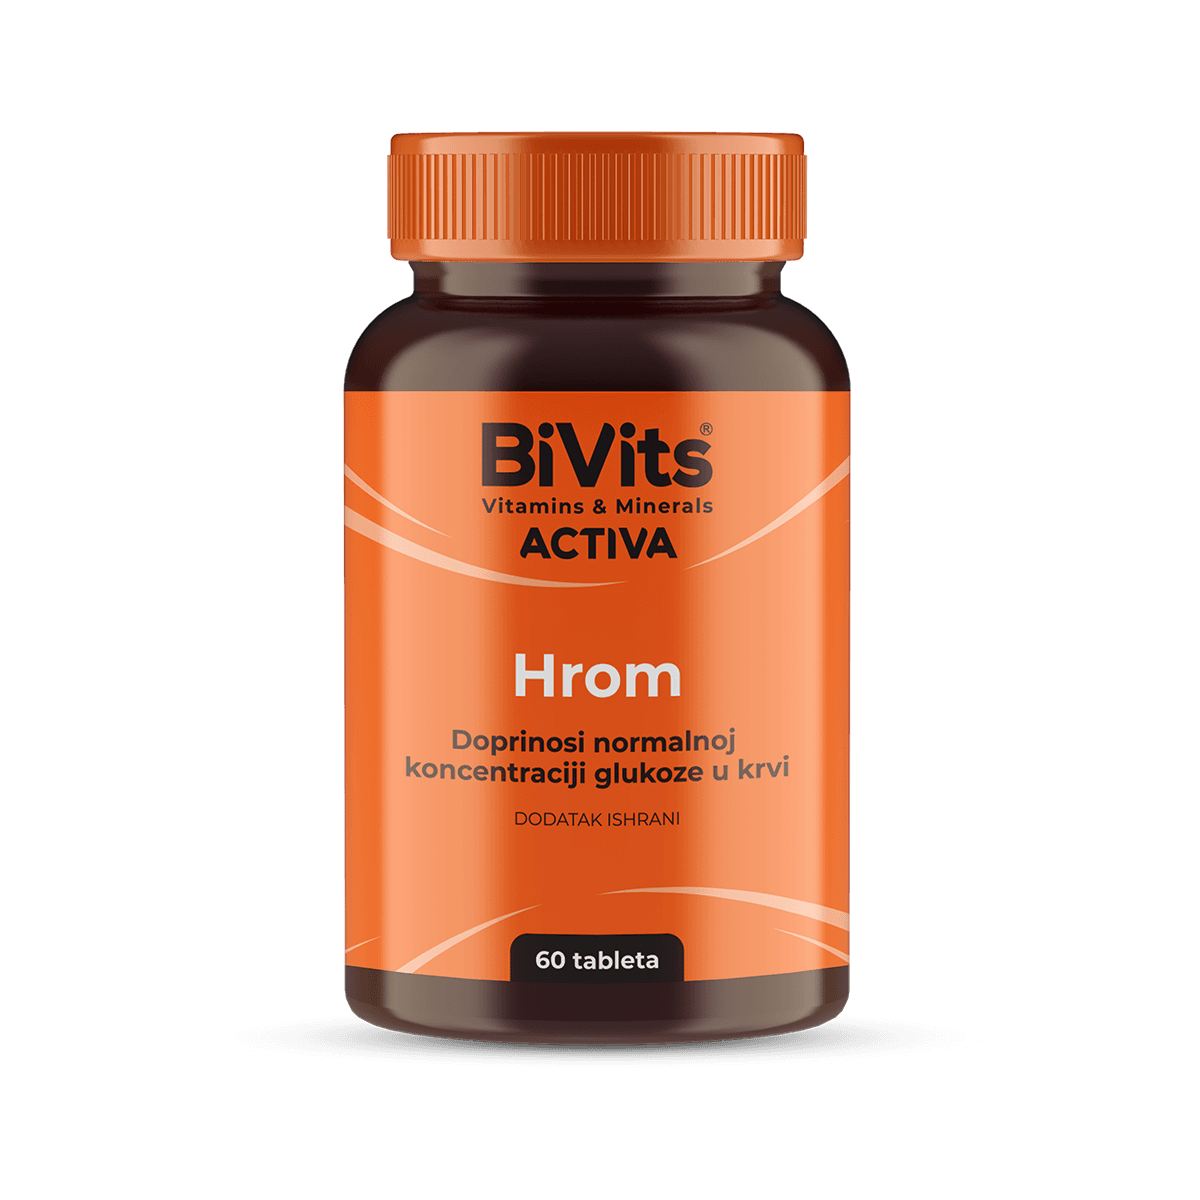 BiVits ACTIVA vitamins&minerals Hrom